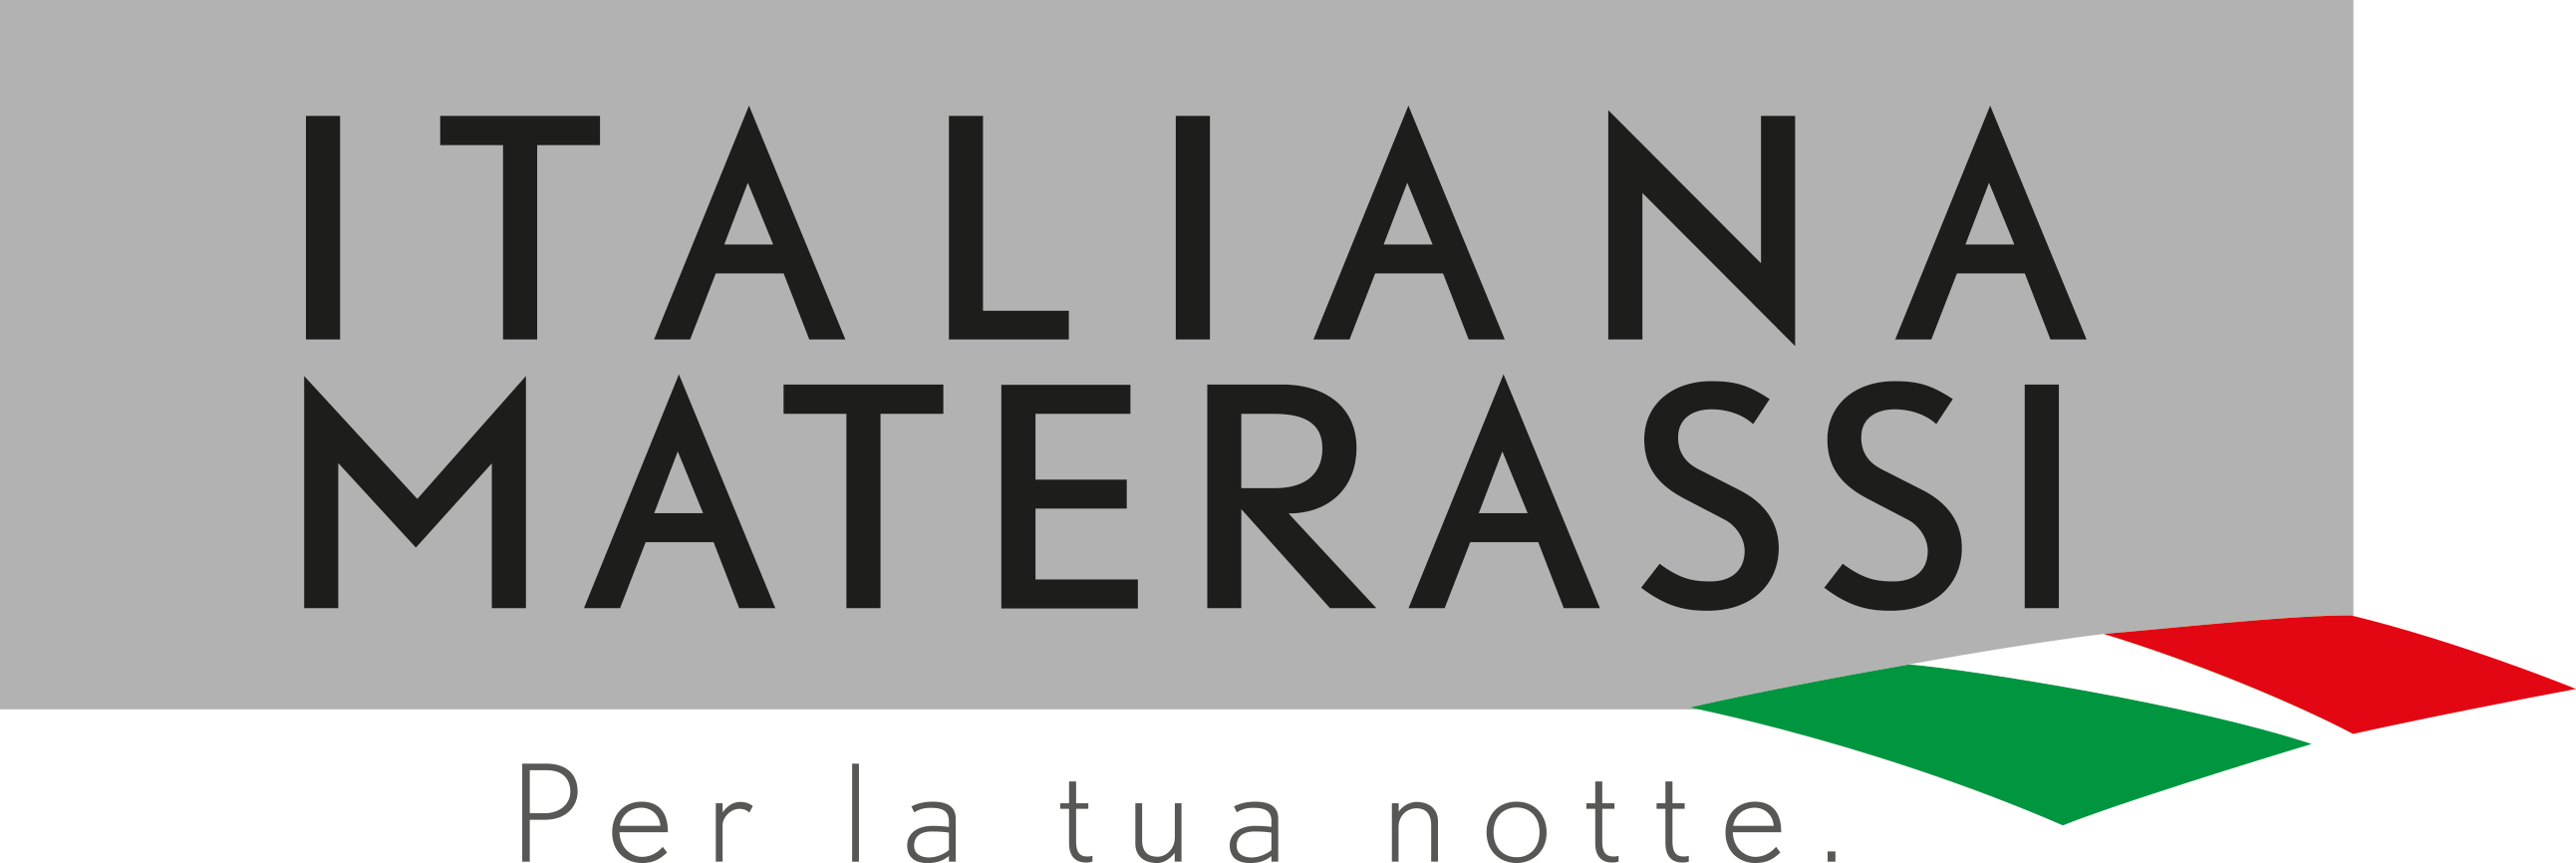 Italiana Materassi